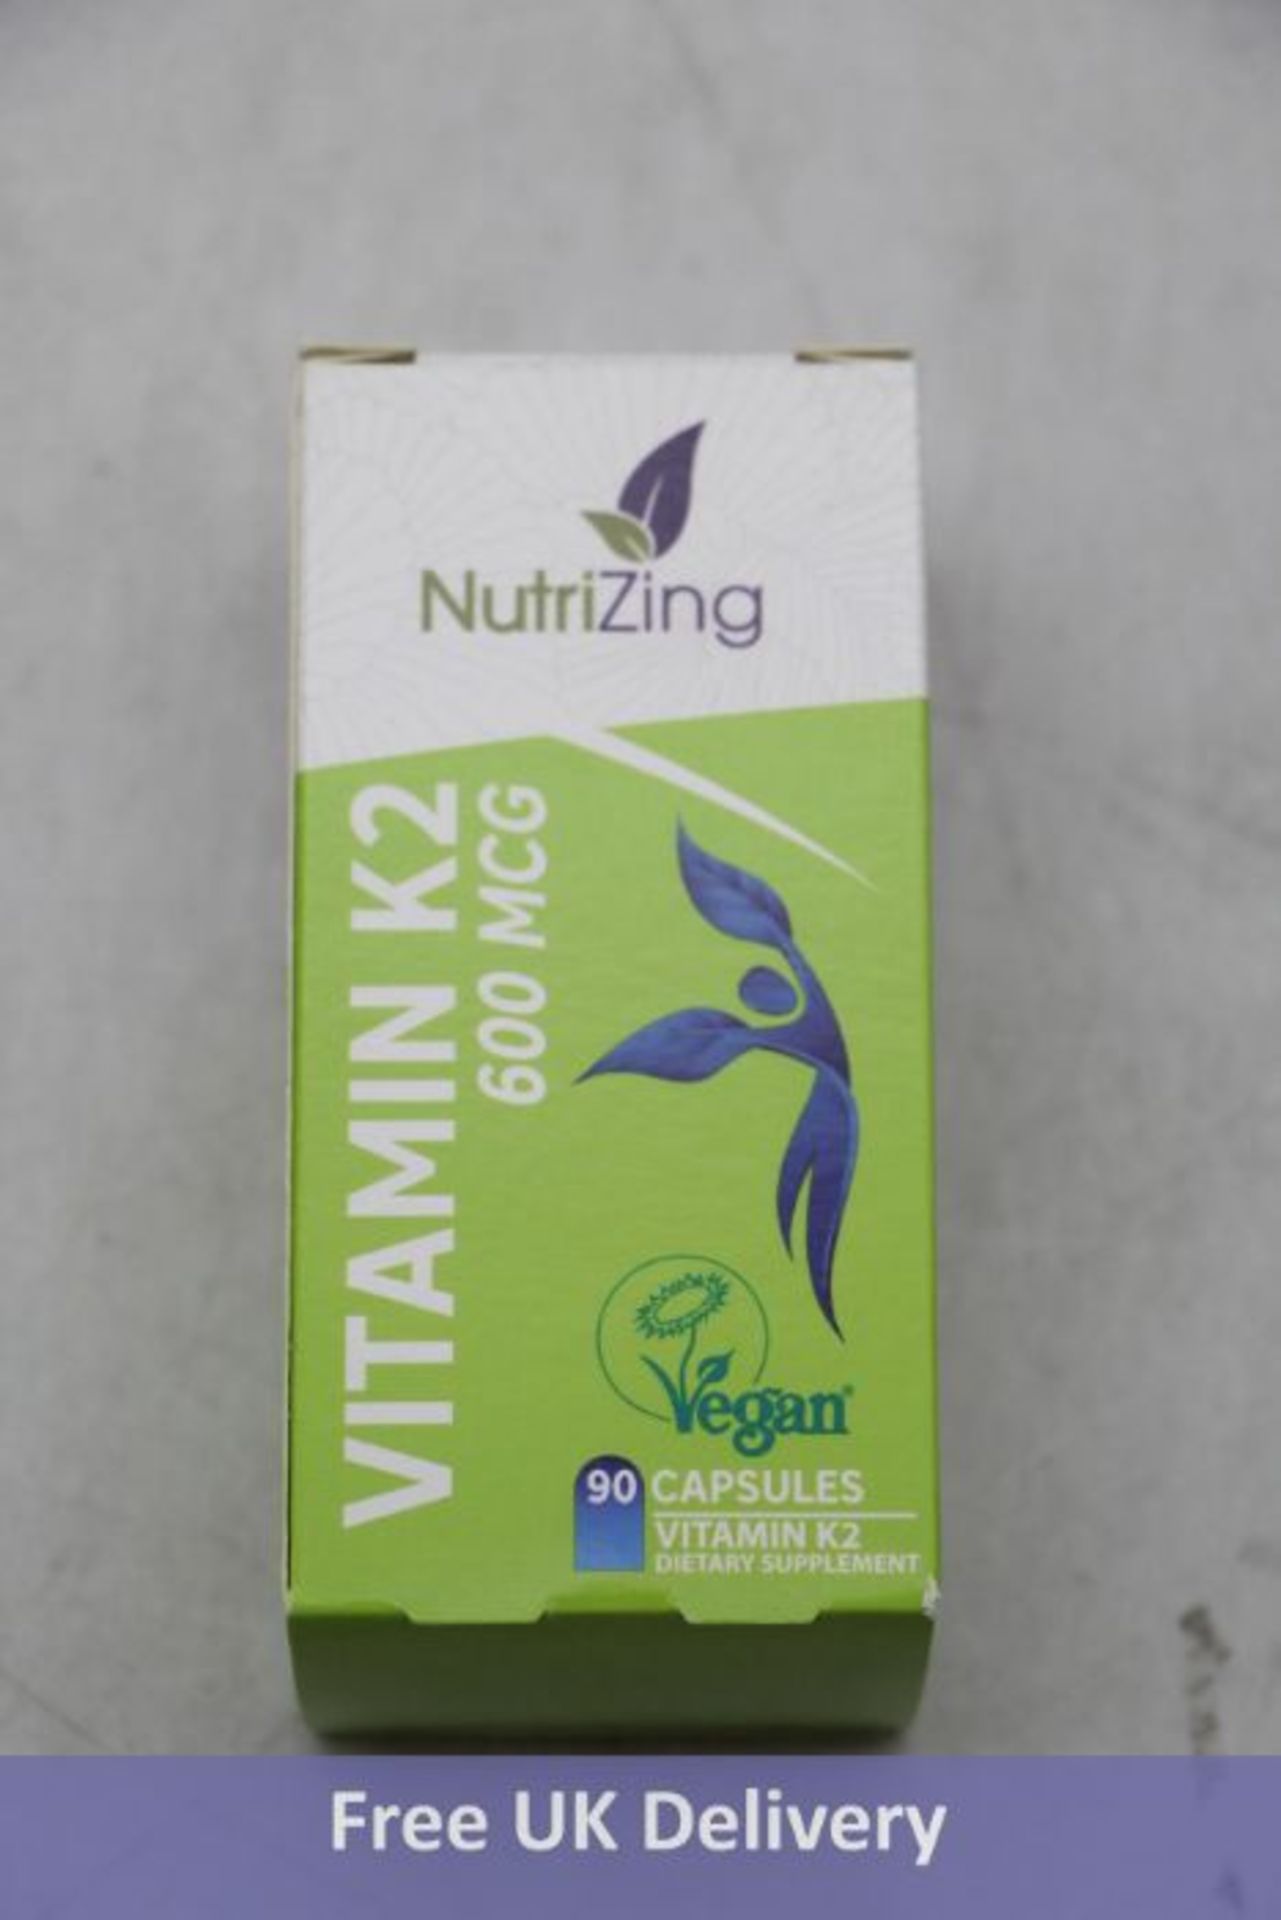 Sixteen Nutrizing Vitamin K2 Dietary Supplement, 90 Capsules, Expiry Date 07/2023 - Image 2 of 2